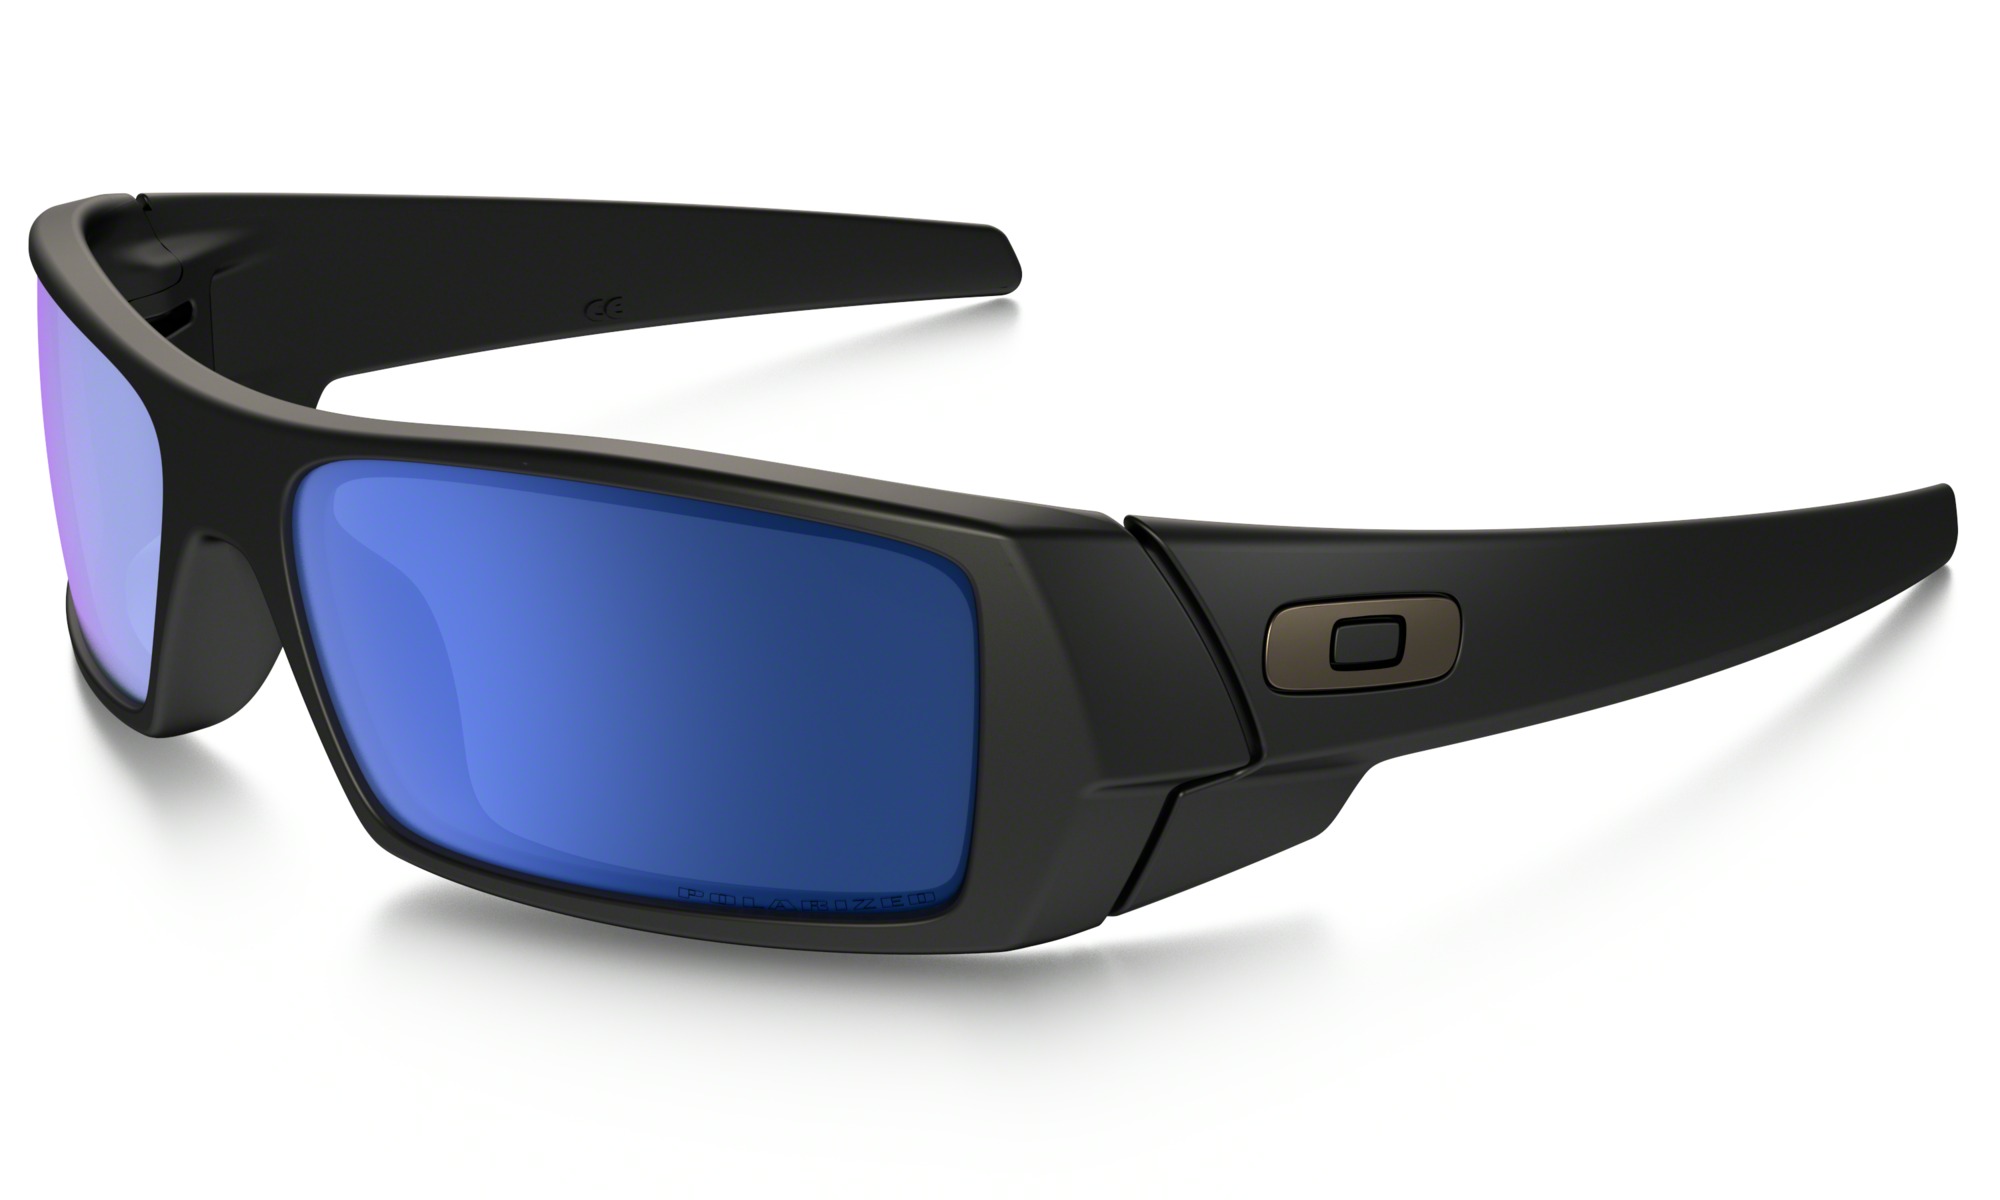 oakley gascan sunglasses